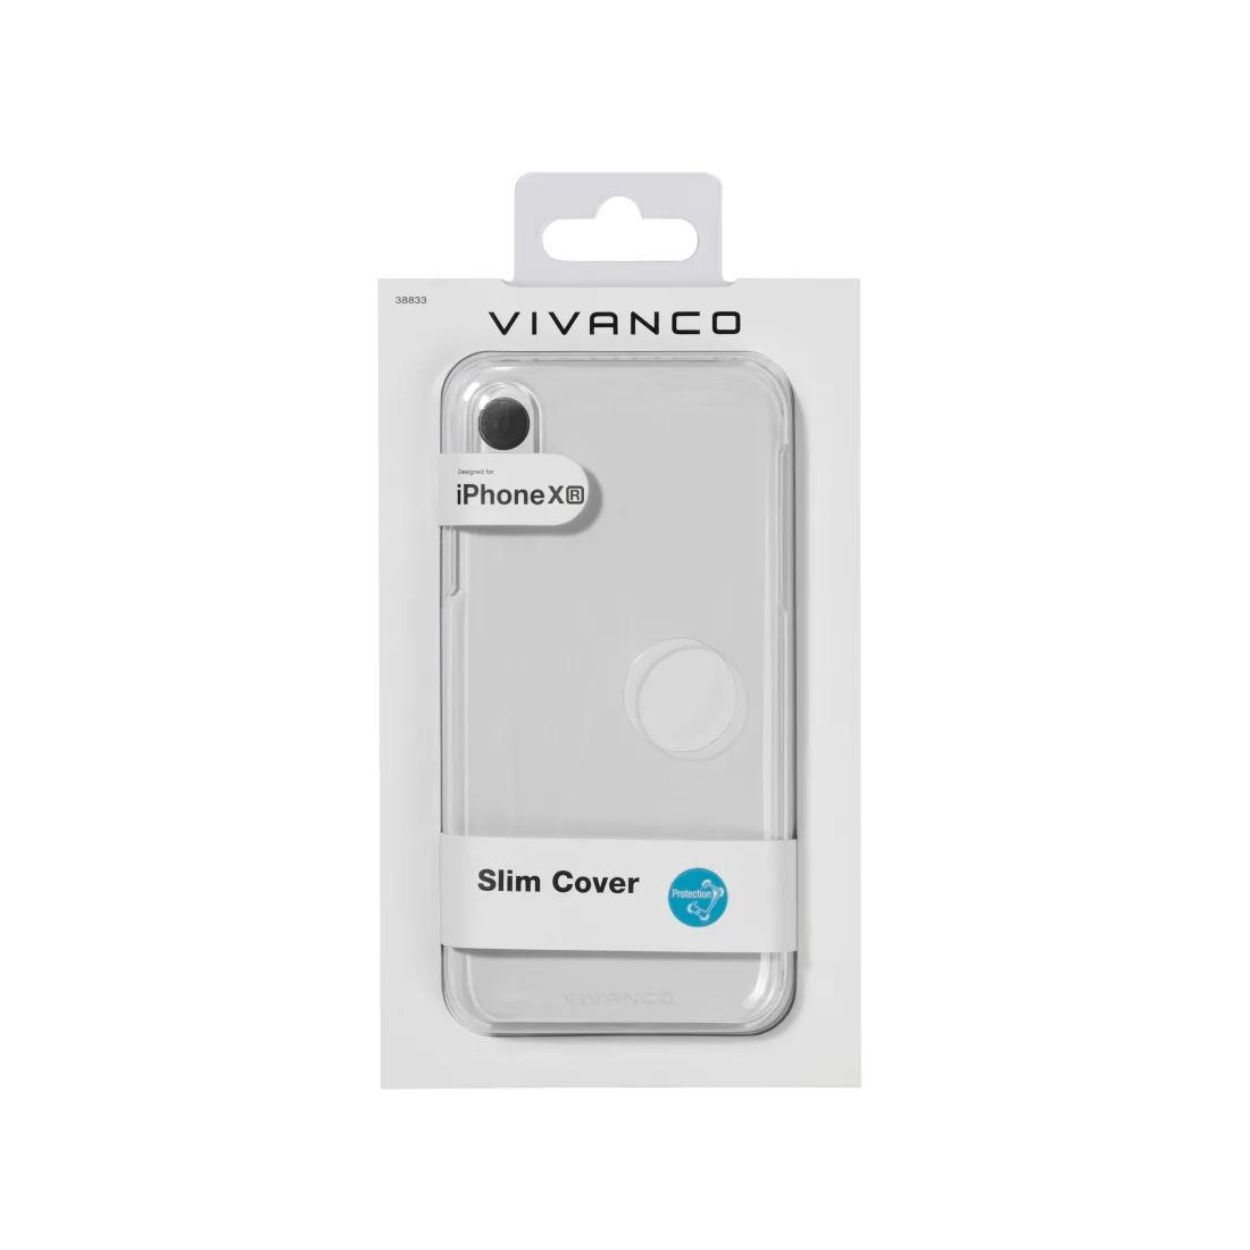 Backcover, Xr, VIVANCO iPhone Apple, 38833, Transparent